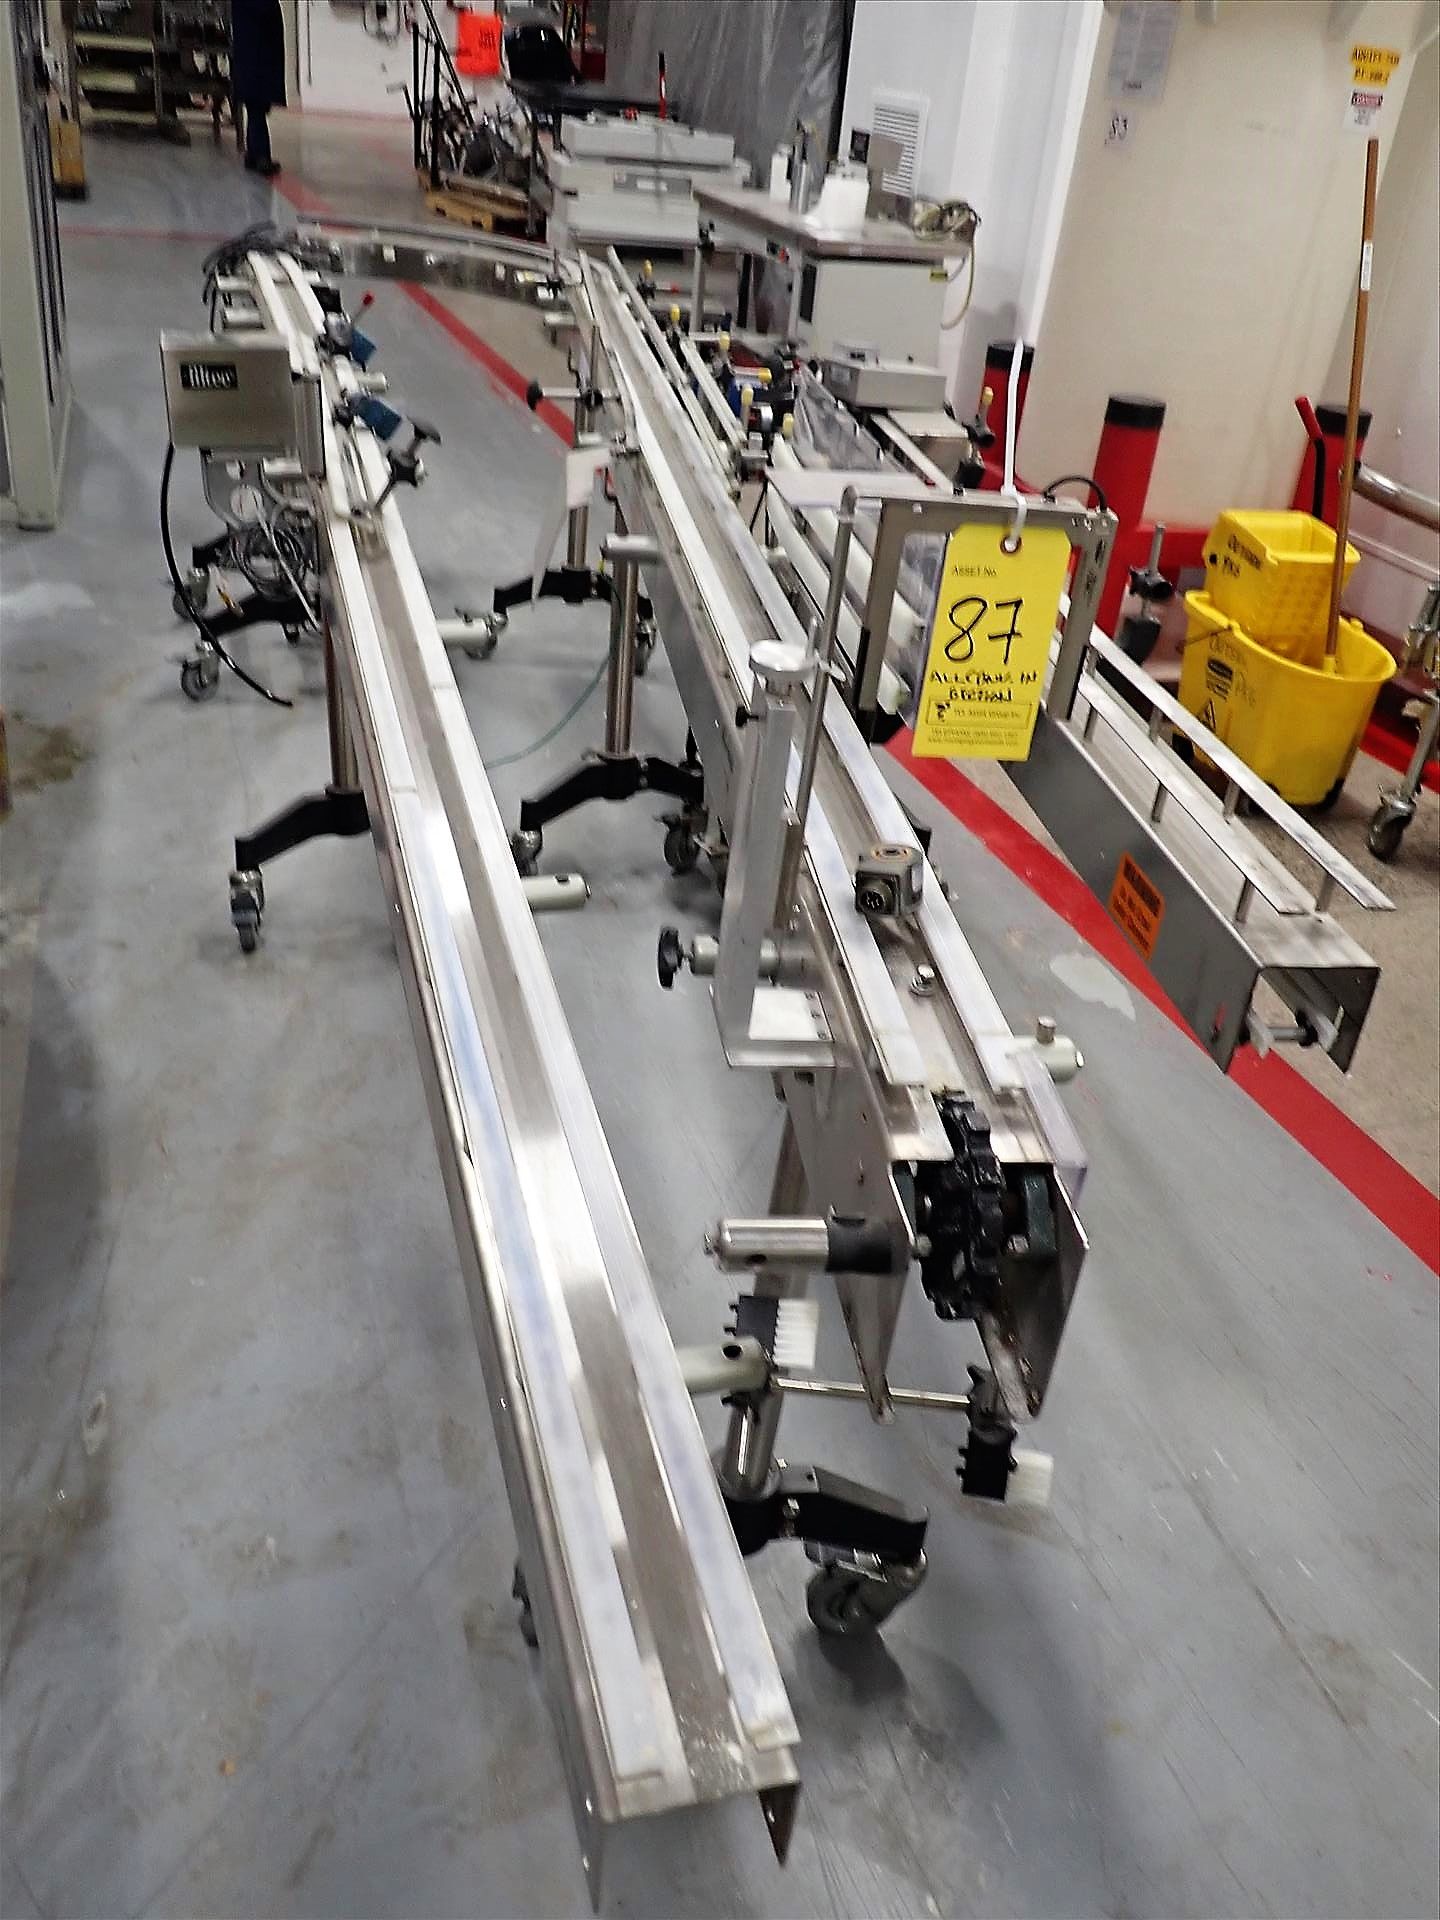 misc. slat-top chain conveyor, s/s, approx. 4" x 70' c/w 1/2 hp motors, VSDs, etc. (no belting) - Image 2 of 8